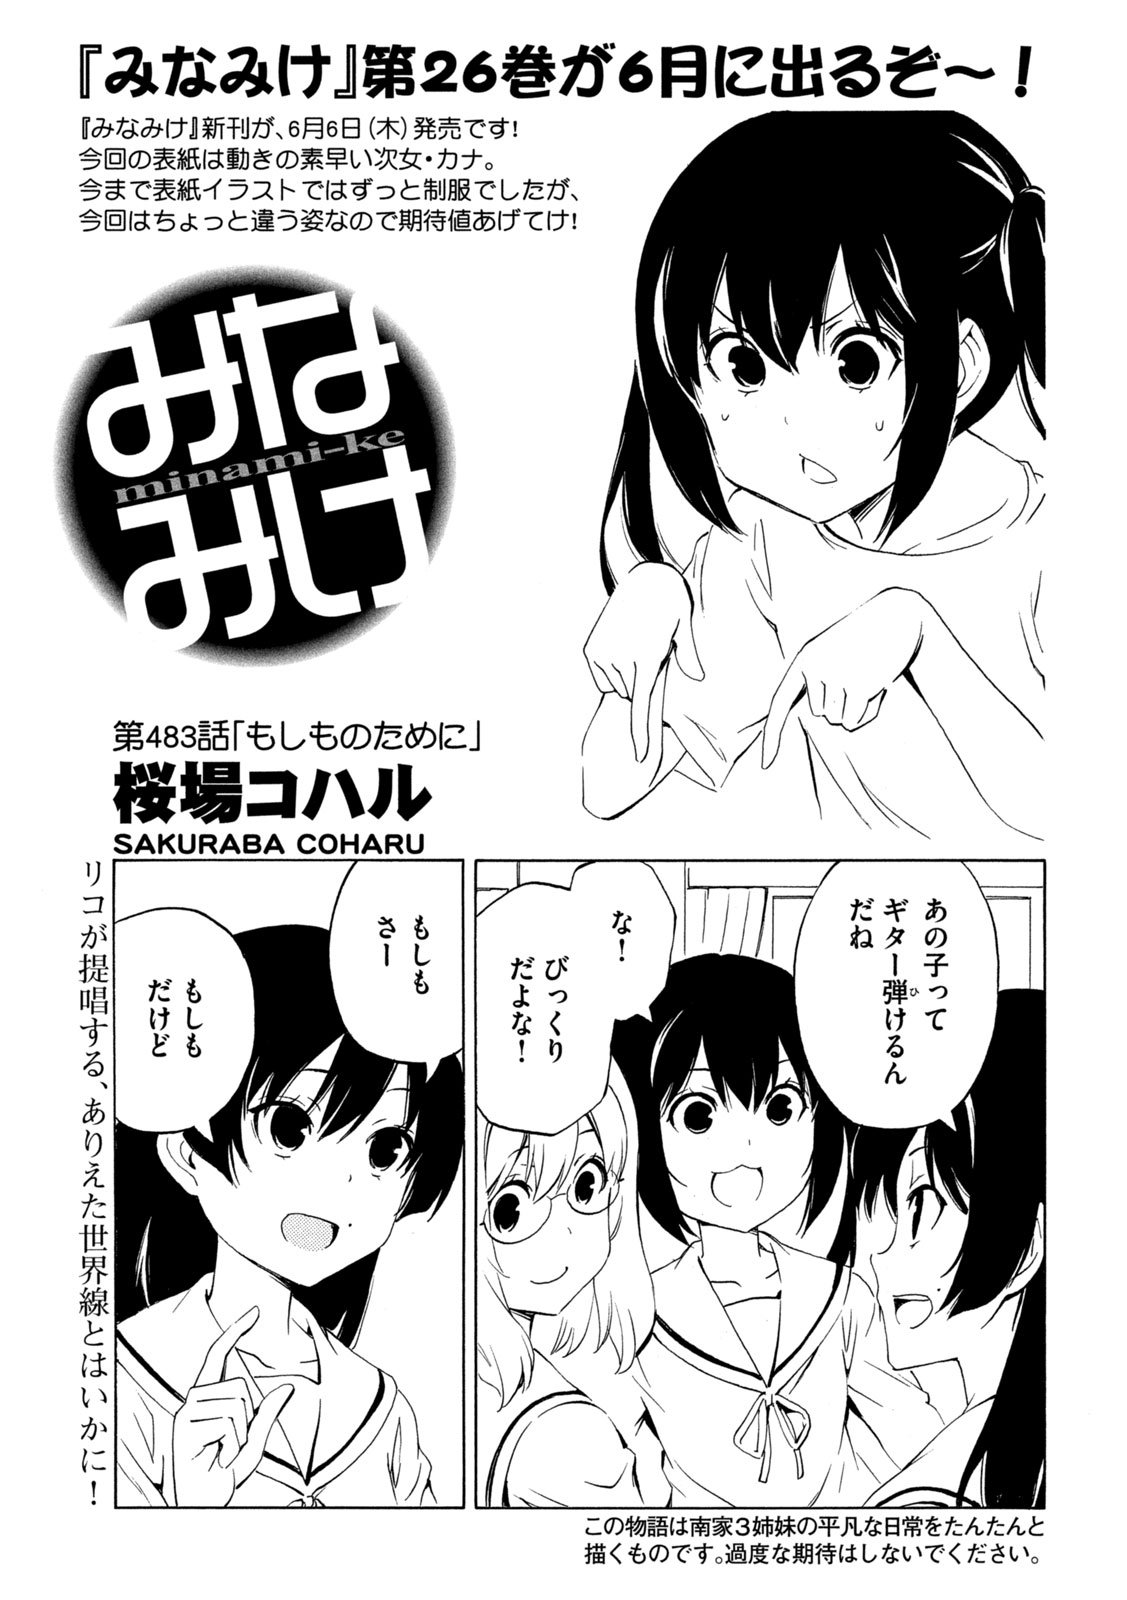 Minami-ke - Chapter 483 - Page 1